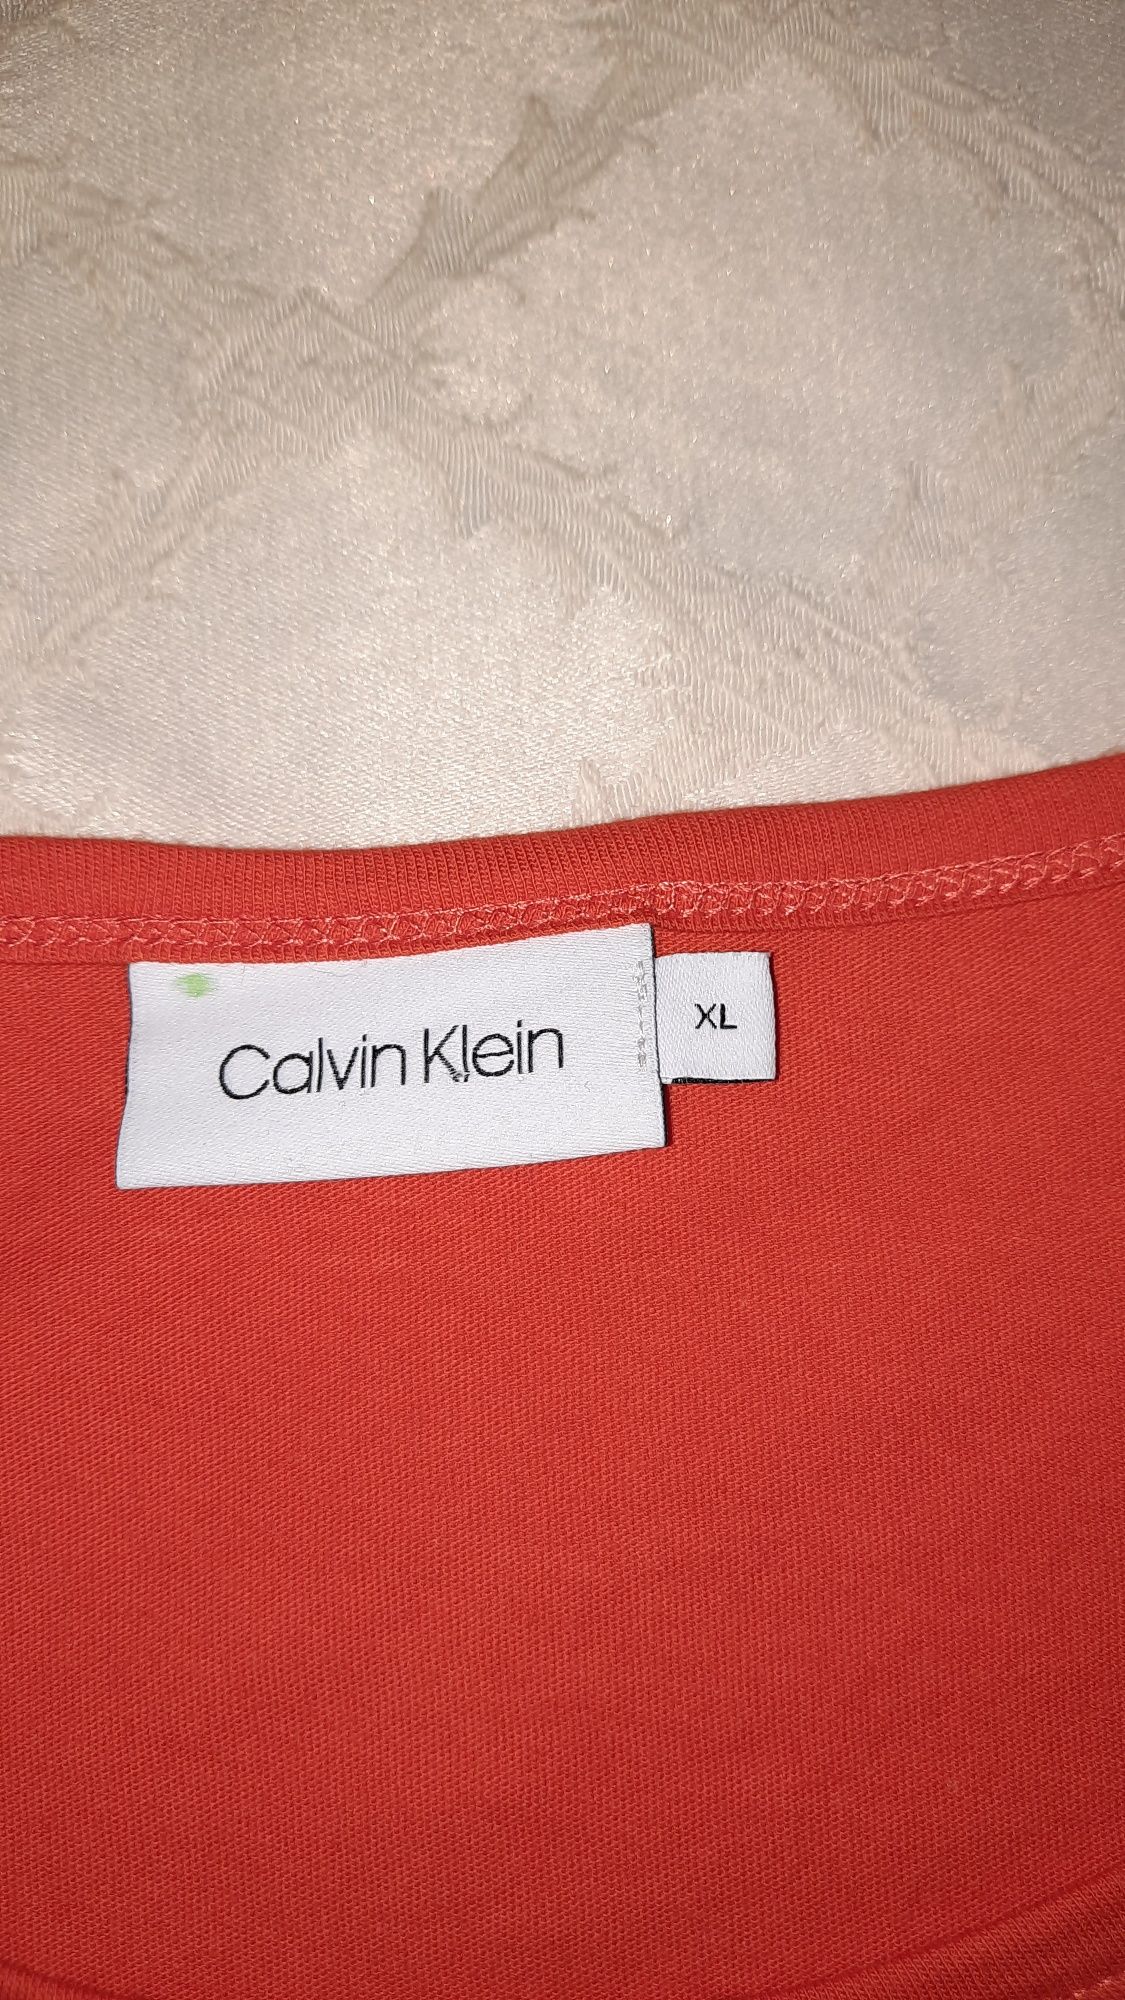 Фирменная футболка овер Calvin Klein Оригинал